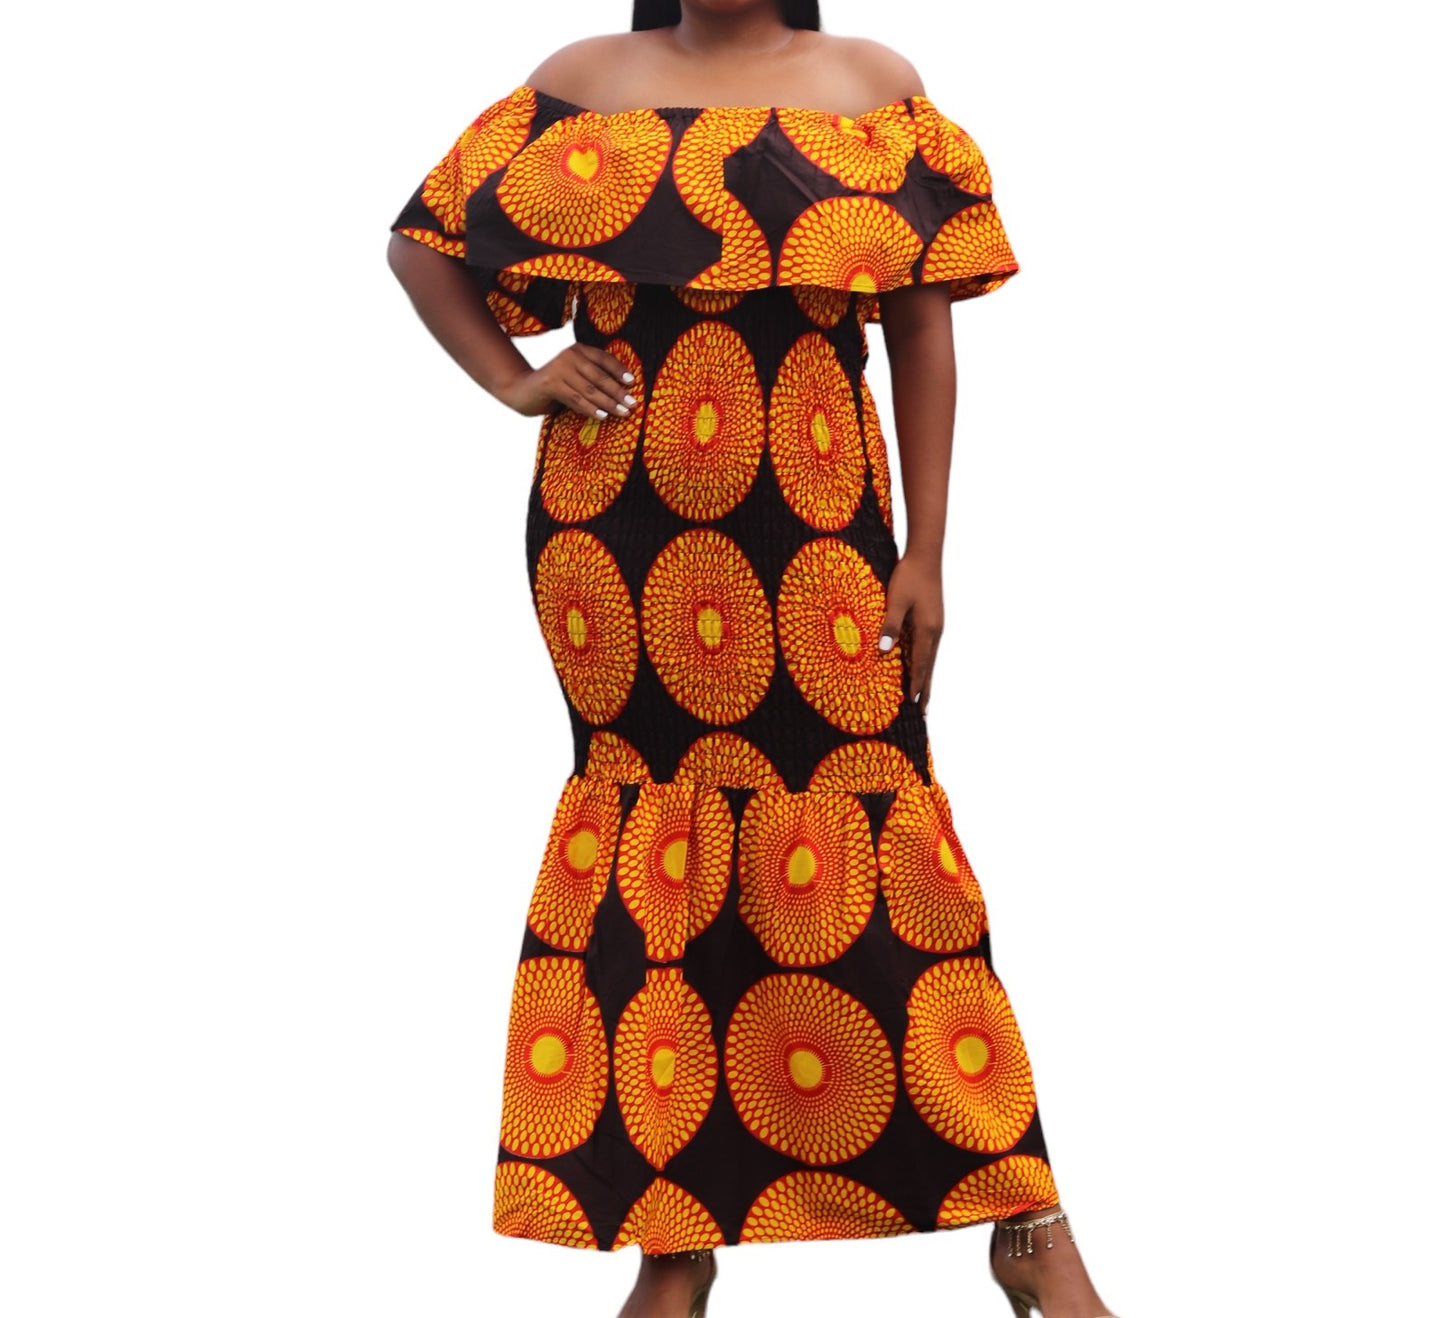 Smoking Off-Shoulder Ruffle Orange Sunburst Dress